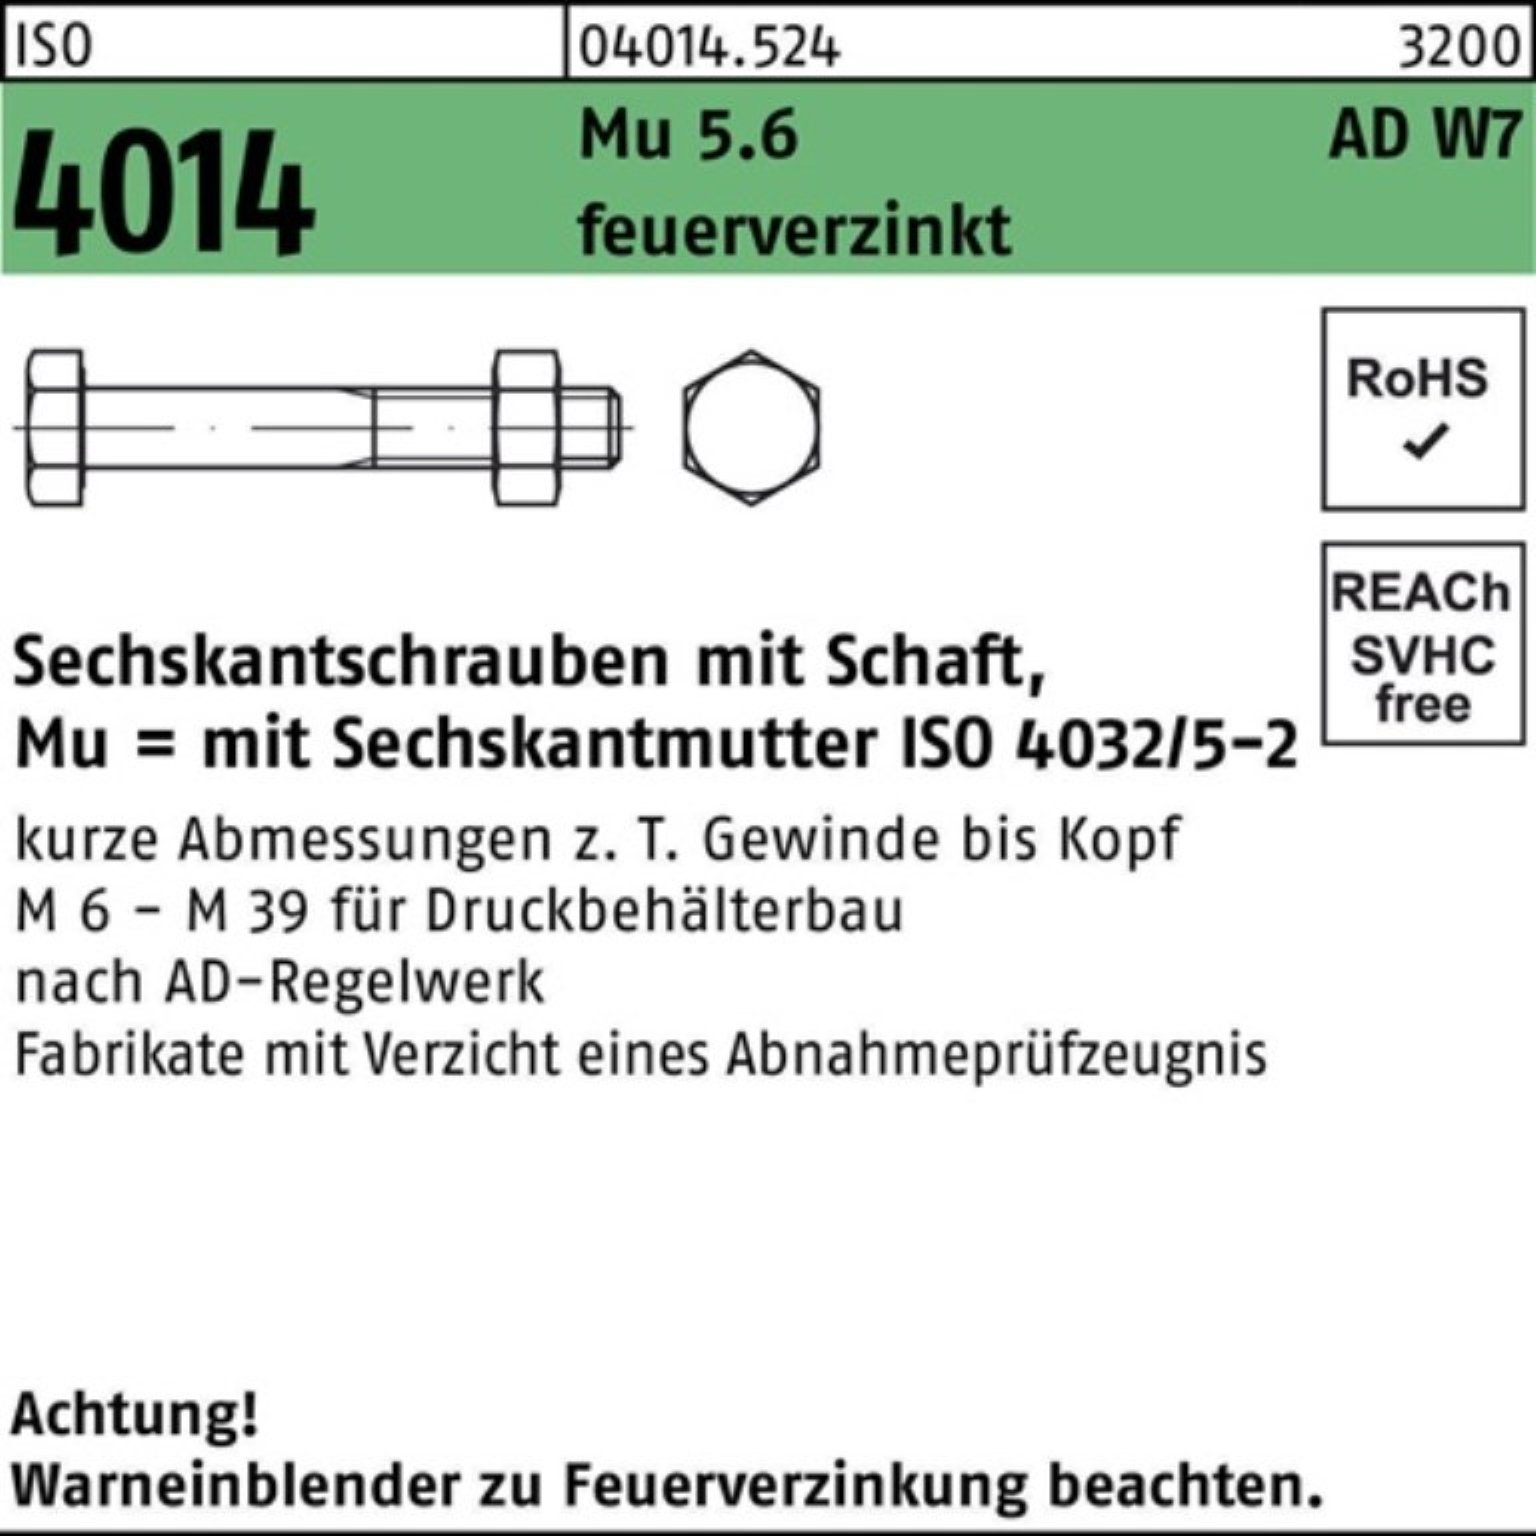 Sechskantschraube Sechskantschraube 5.6 4014 Pack M20x Bufab feuerv Mu W7 140 100er ISO Schaft